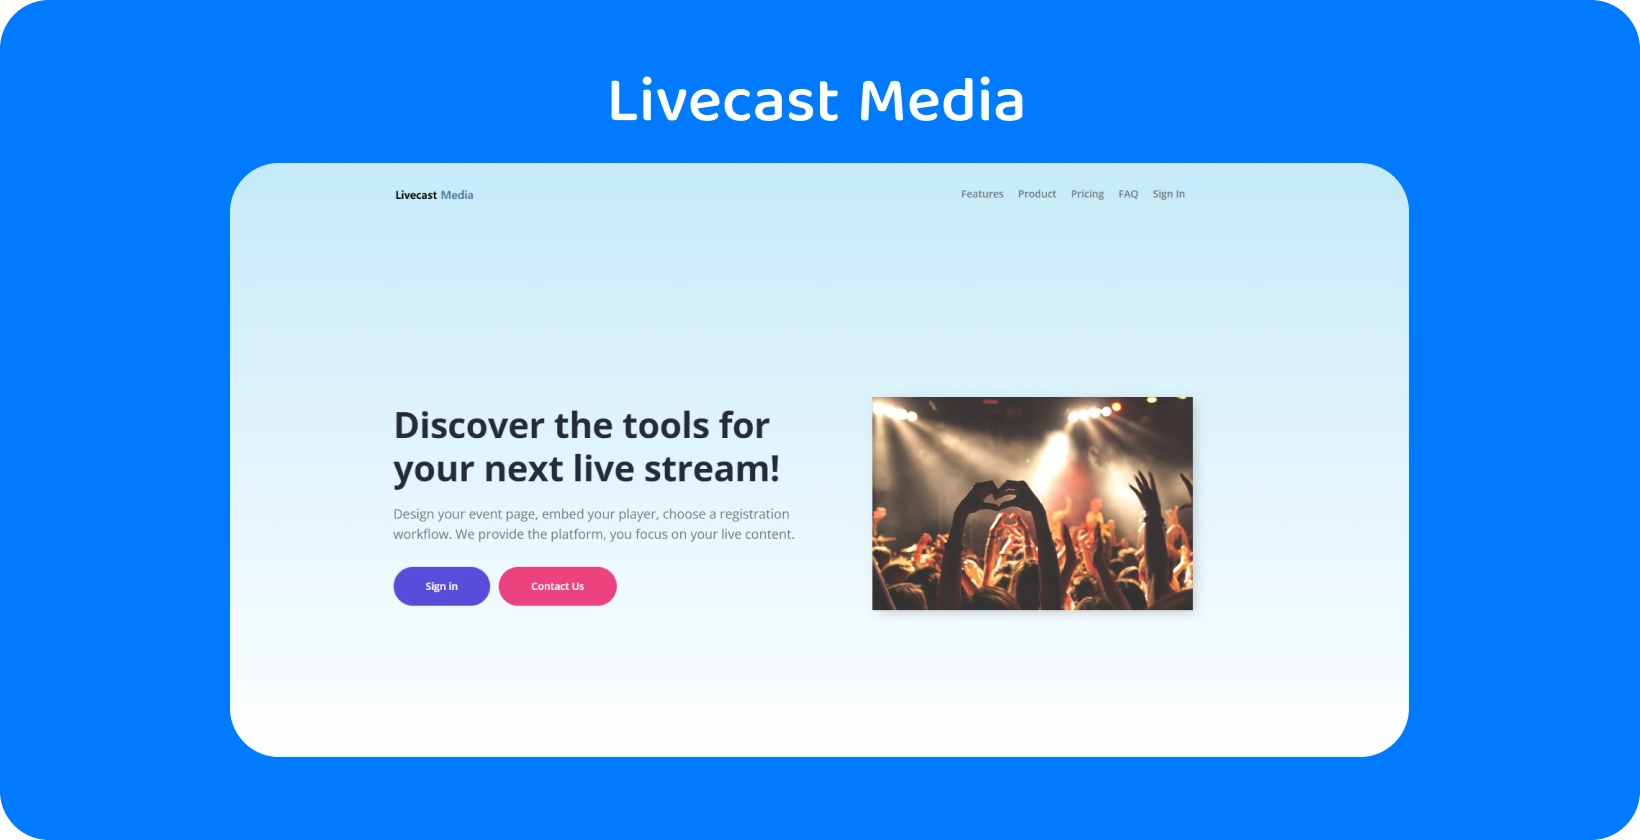 Terlibat dengan khalayak menggunakan alat penstriman Livecast Media, sesuai untuk mencipta acara langsung yang tidak dapat dilupakan.